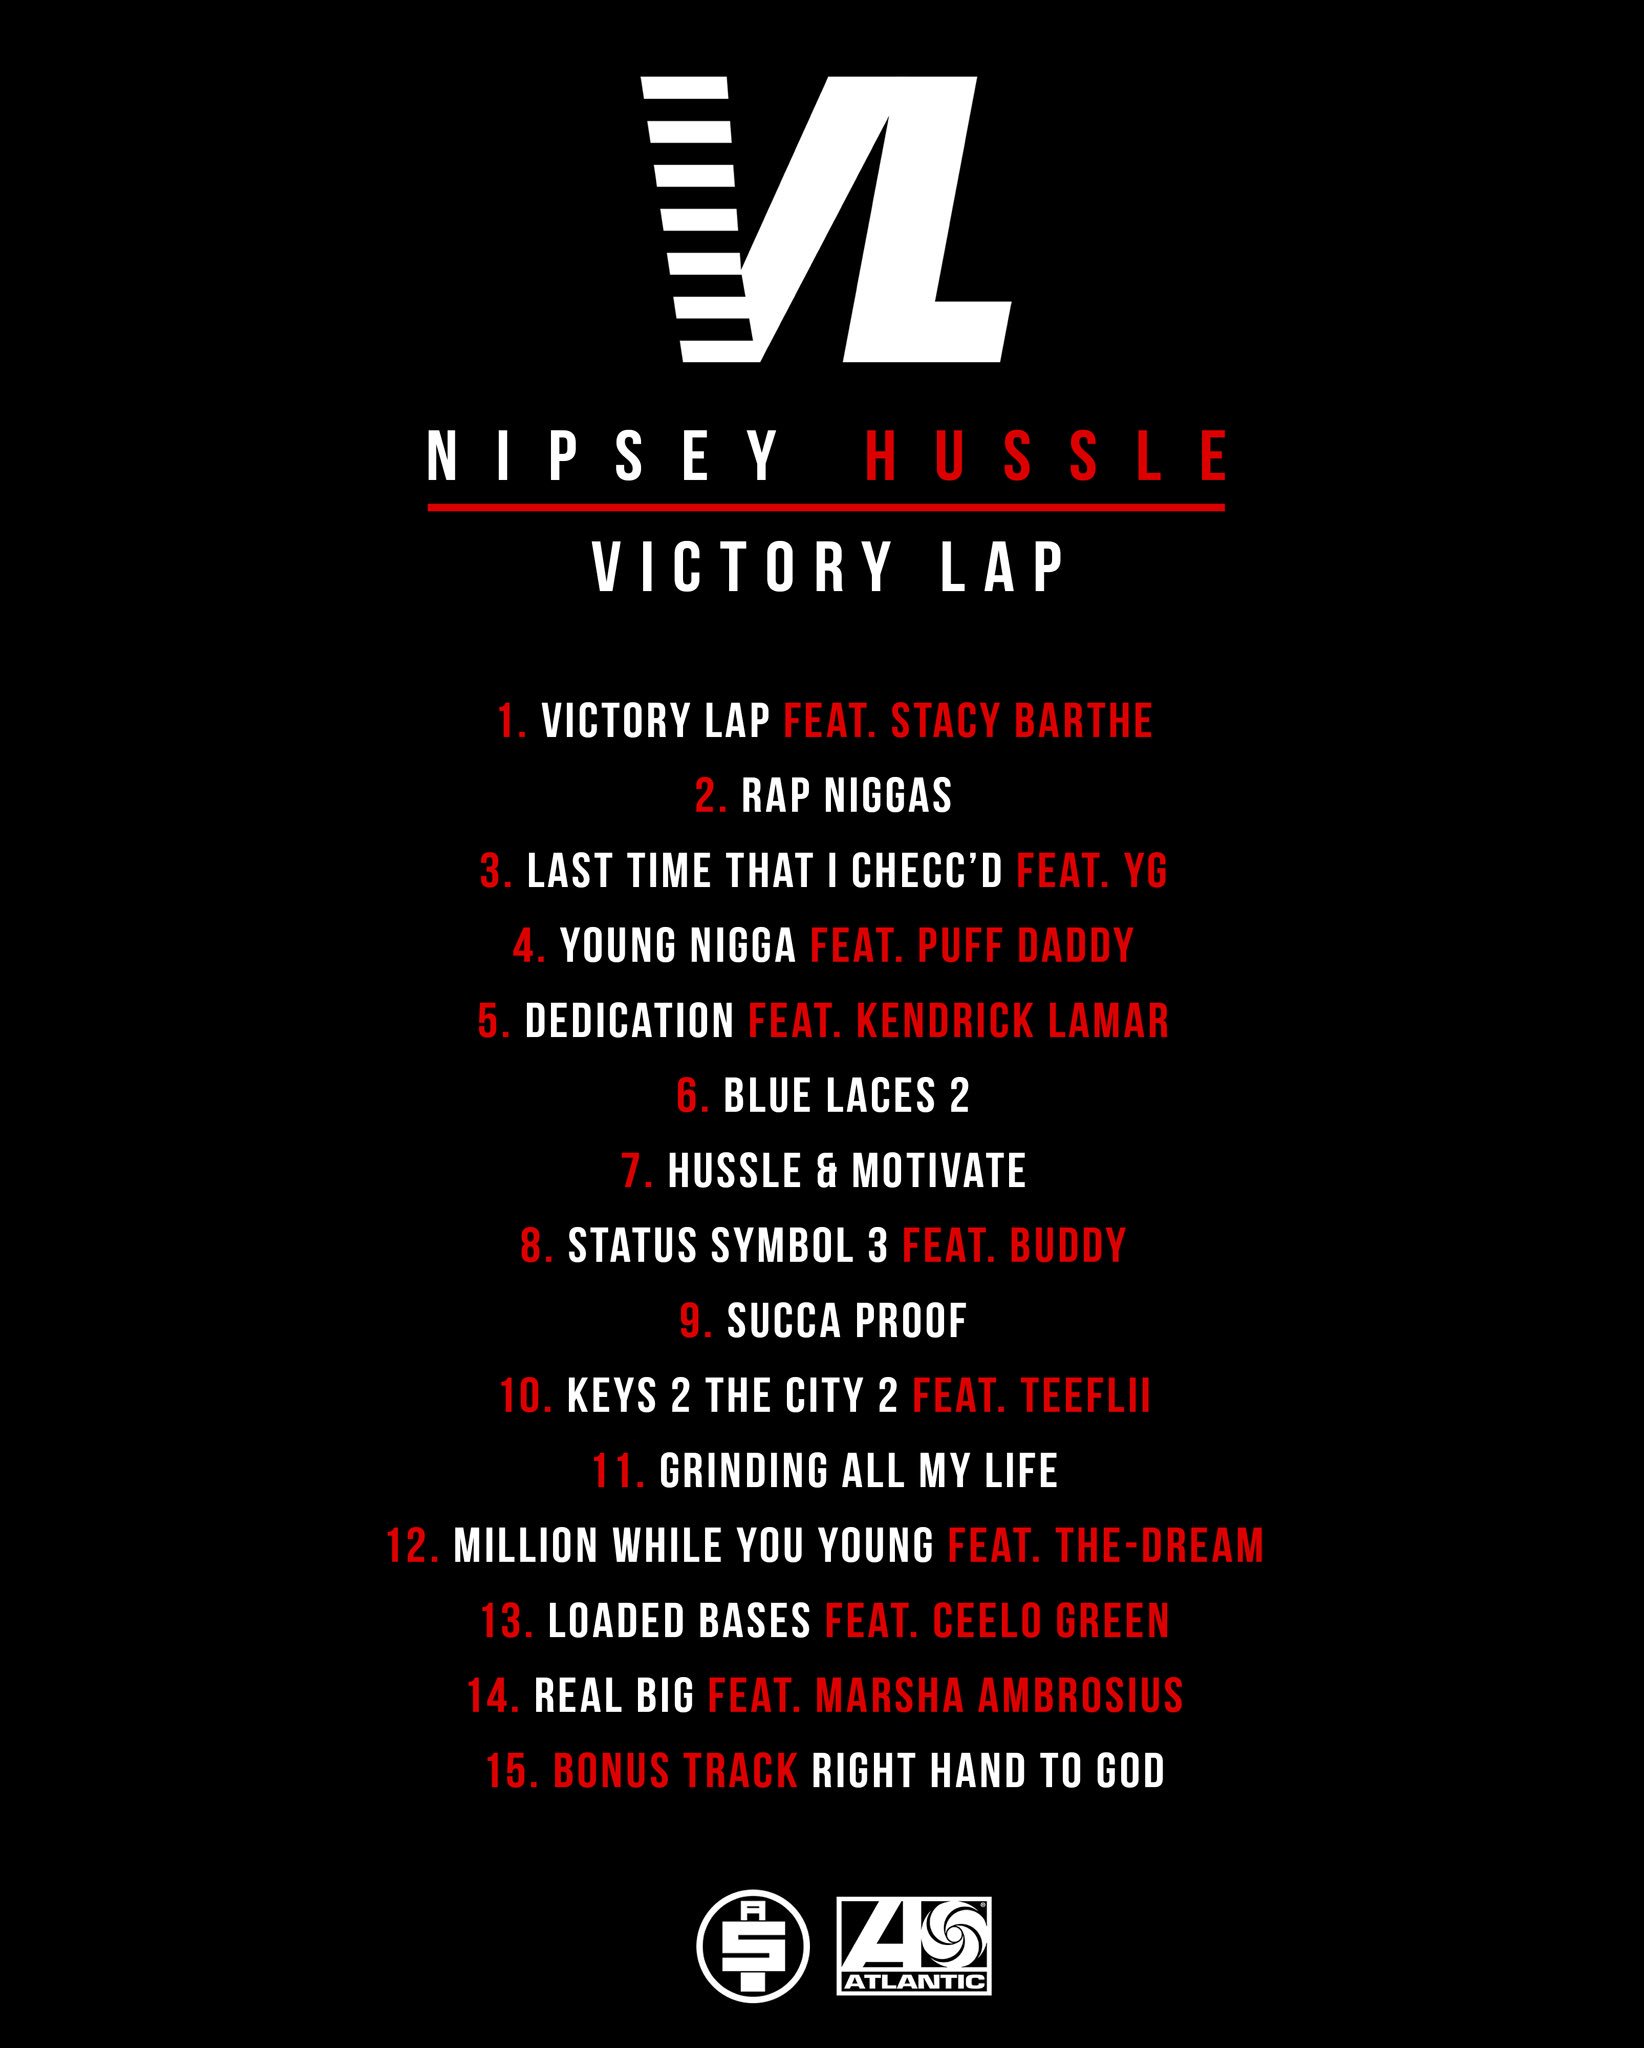 Nipsey Hussle - "Victory Lap" (Album Tracklist) .